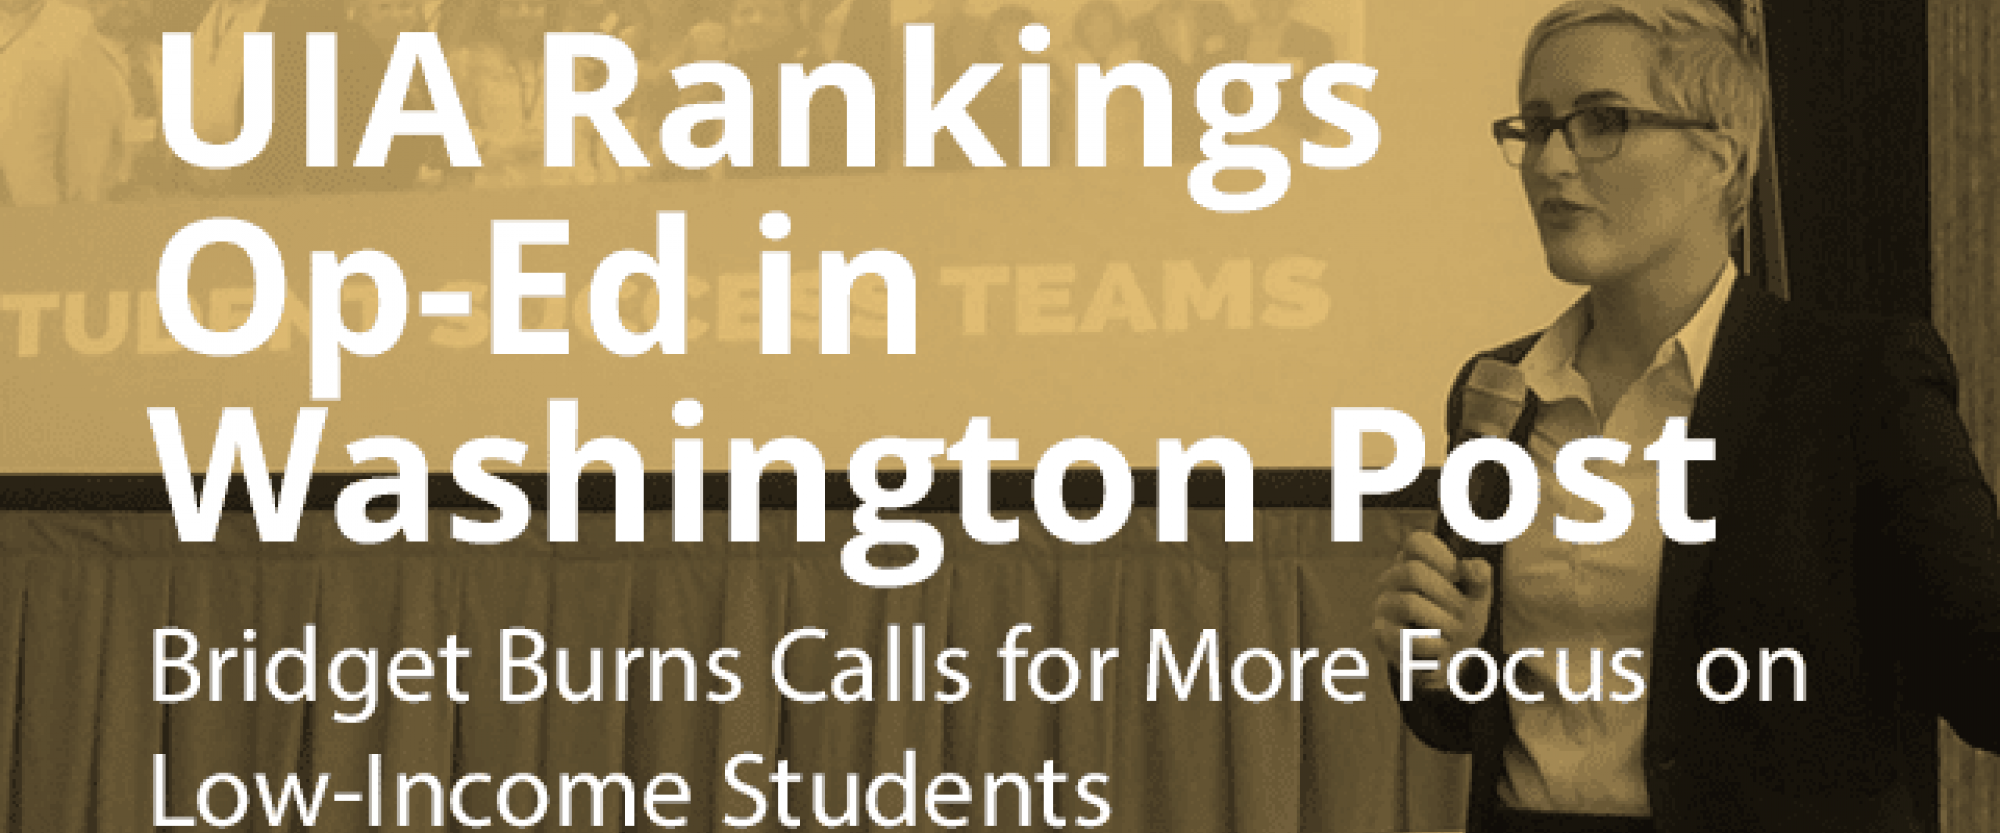 UIA College Rankings Op-Ed Appears in Washington Post